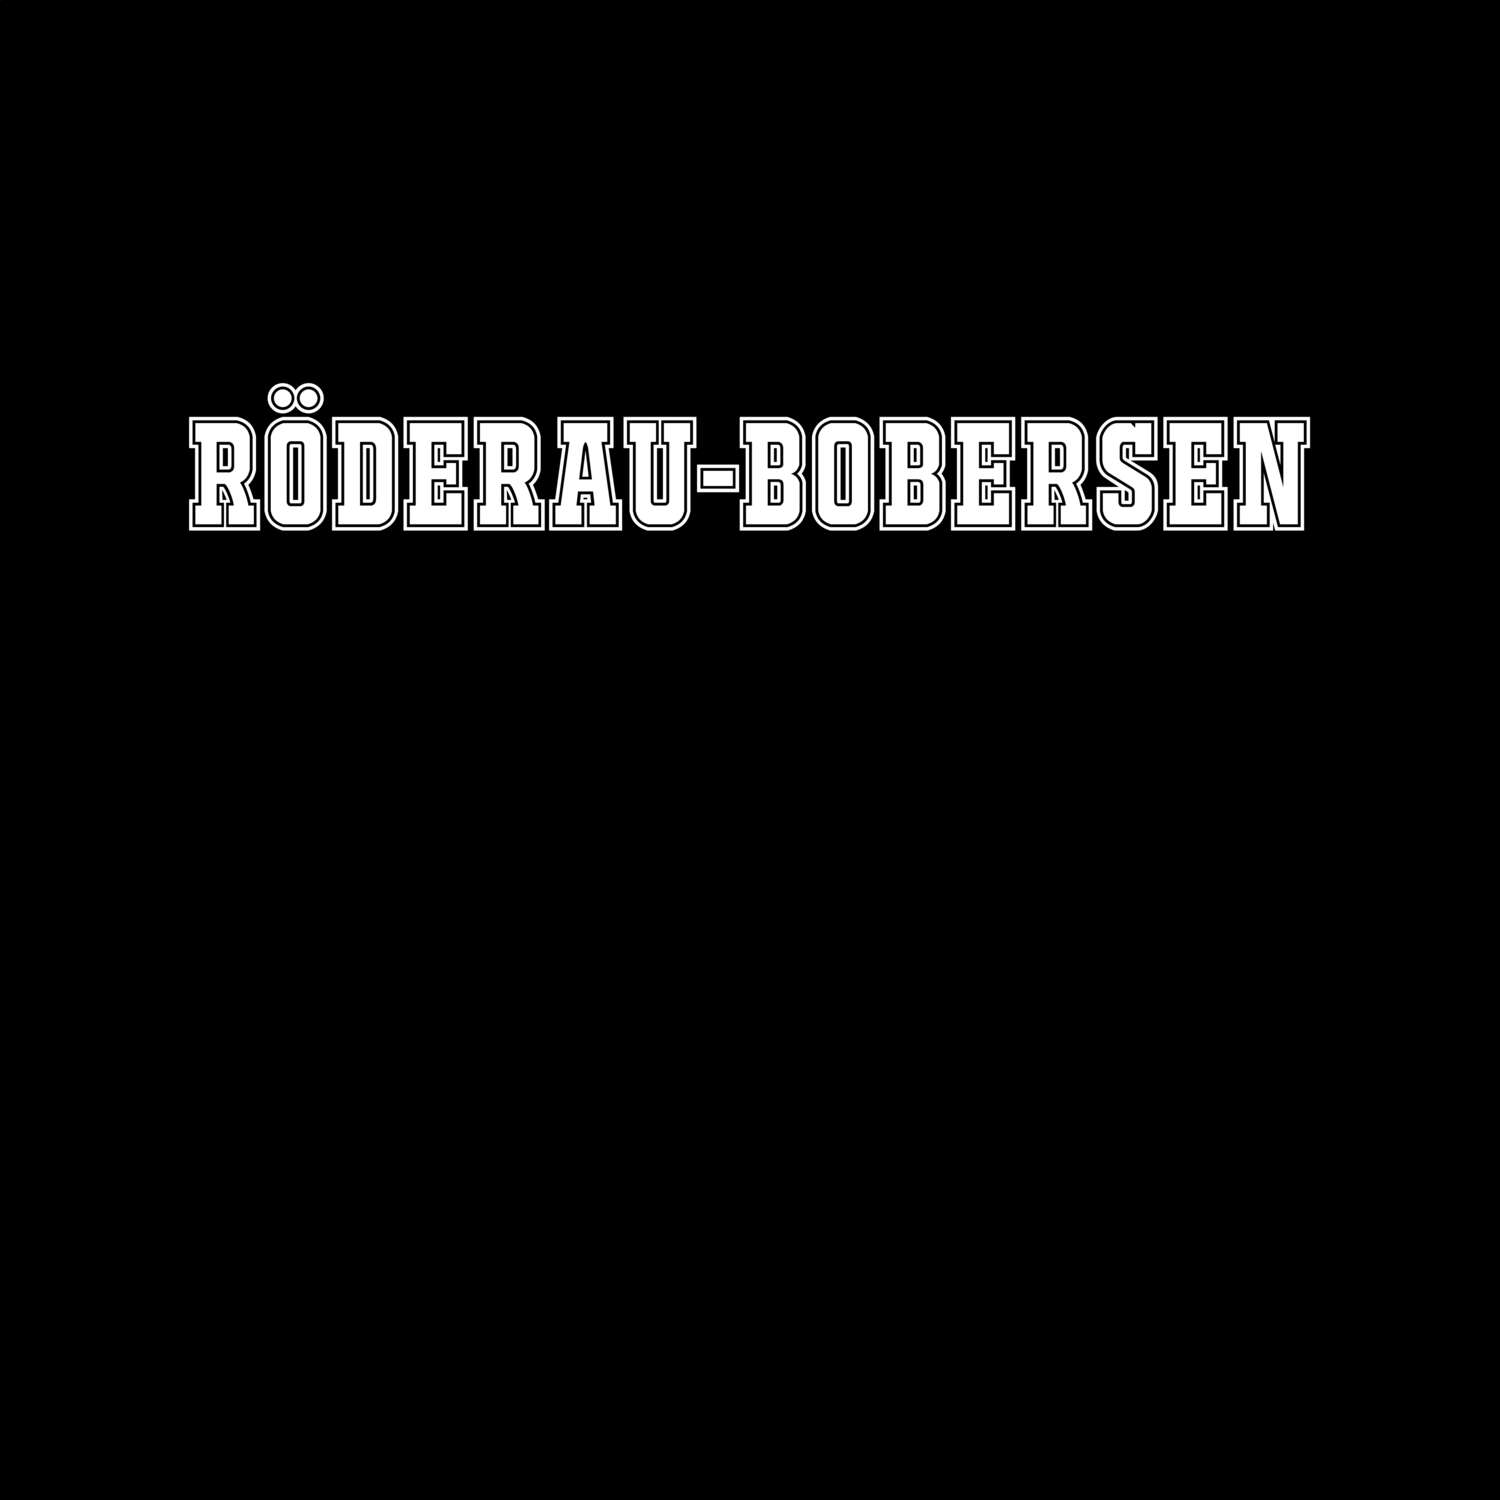 Röderau-Bobersen T-Shirt »Classic«